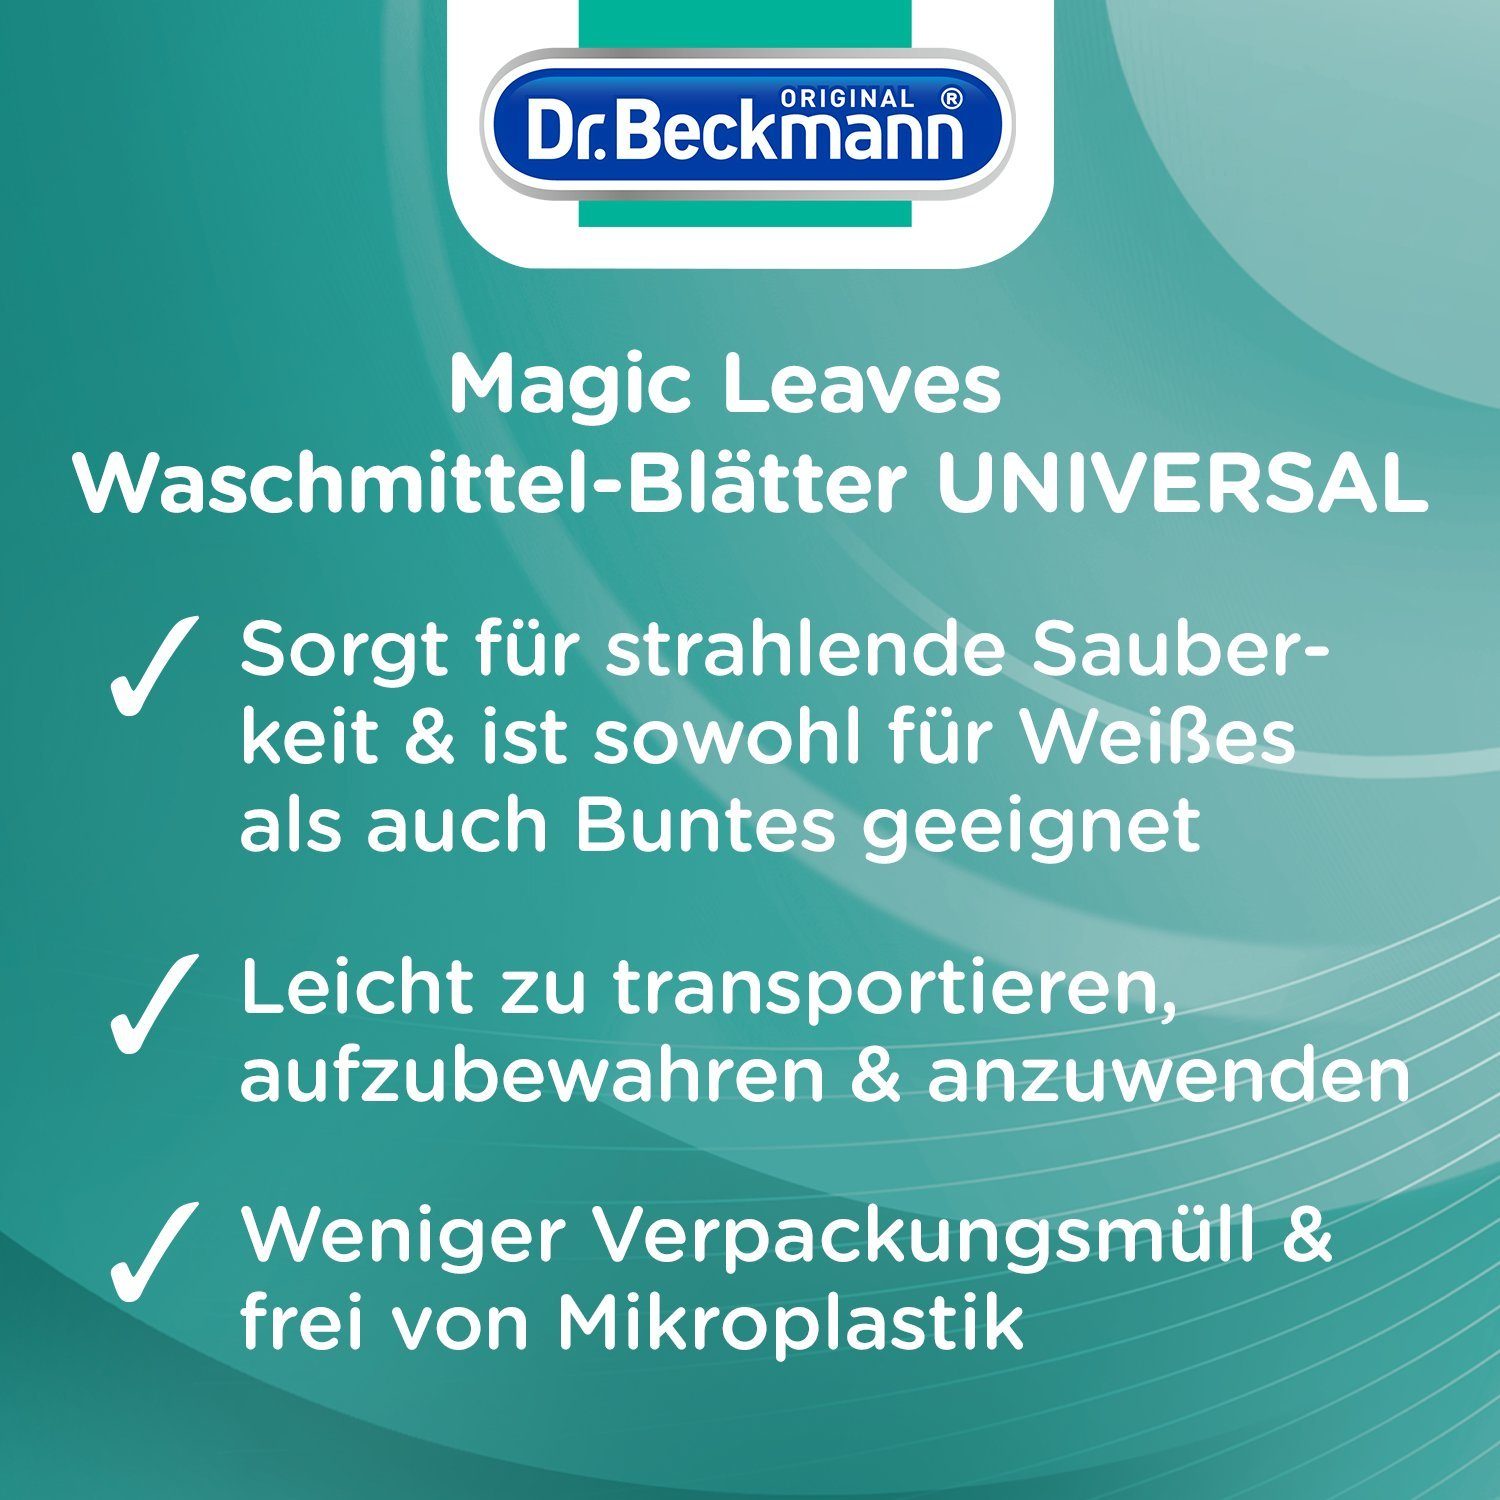 Dr. wasserlösliche (1-St) UNIVERSAL, 40 Waschblätter, Blätter Beckmann Vollwaschmittel MAGIC LEAVES